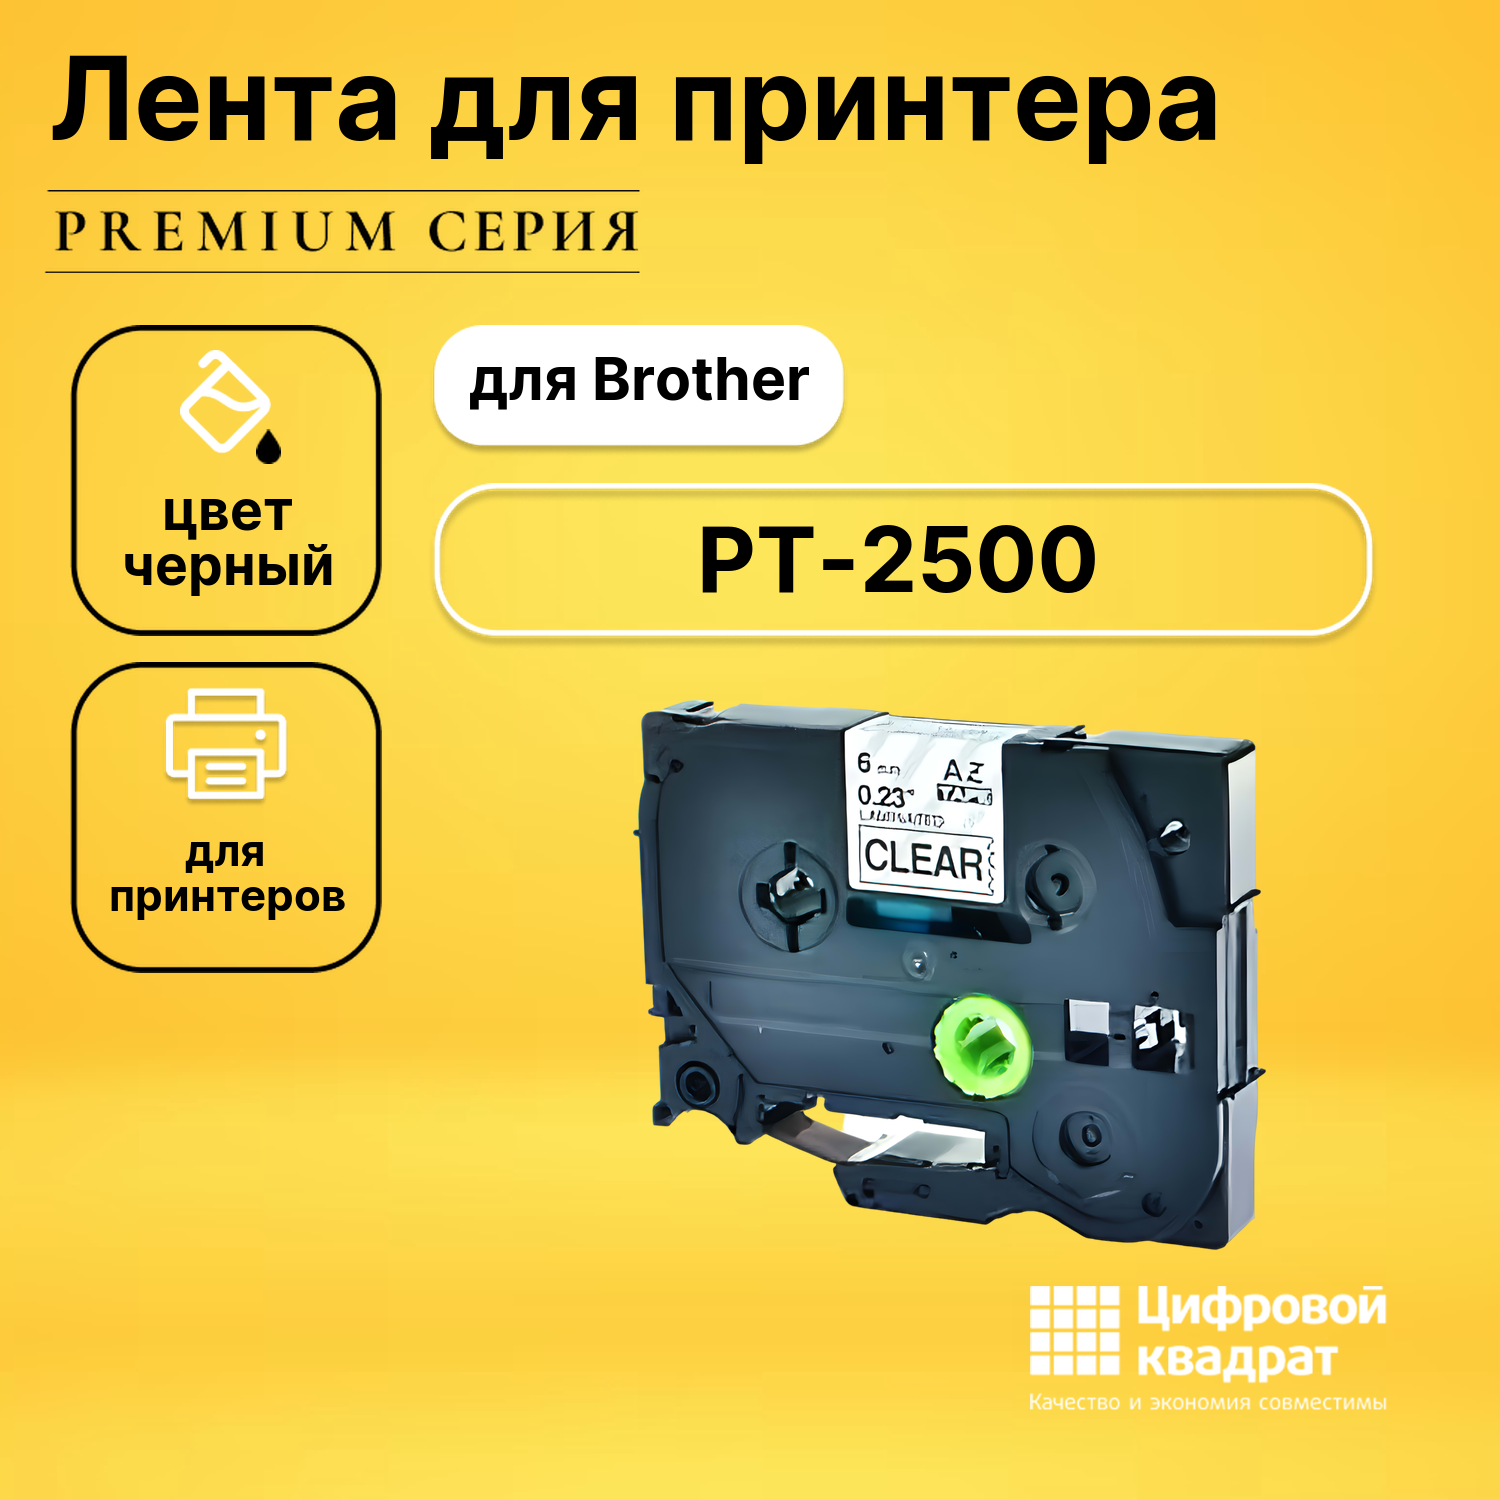 Лента для печати этикеток и наклеек для Brother PT-2500